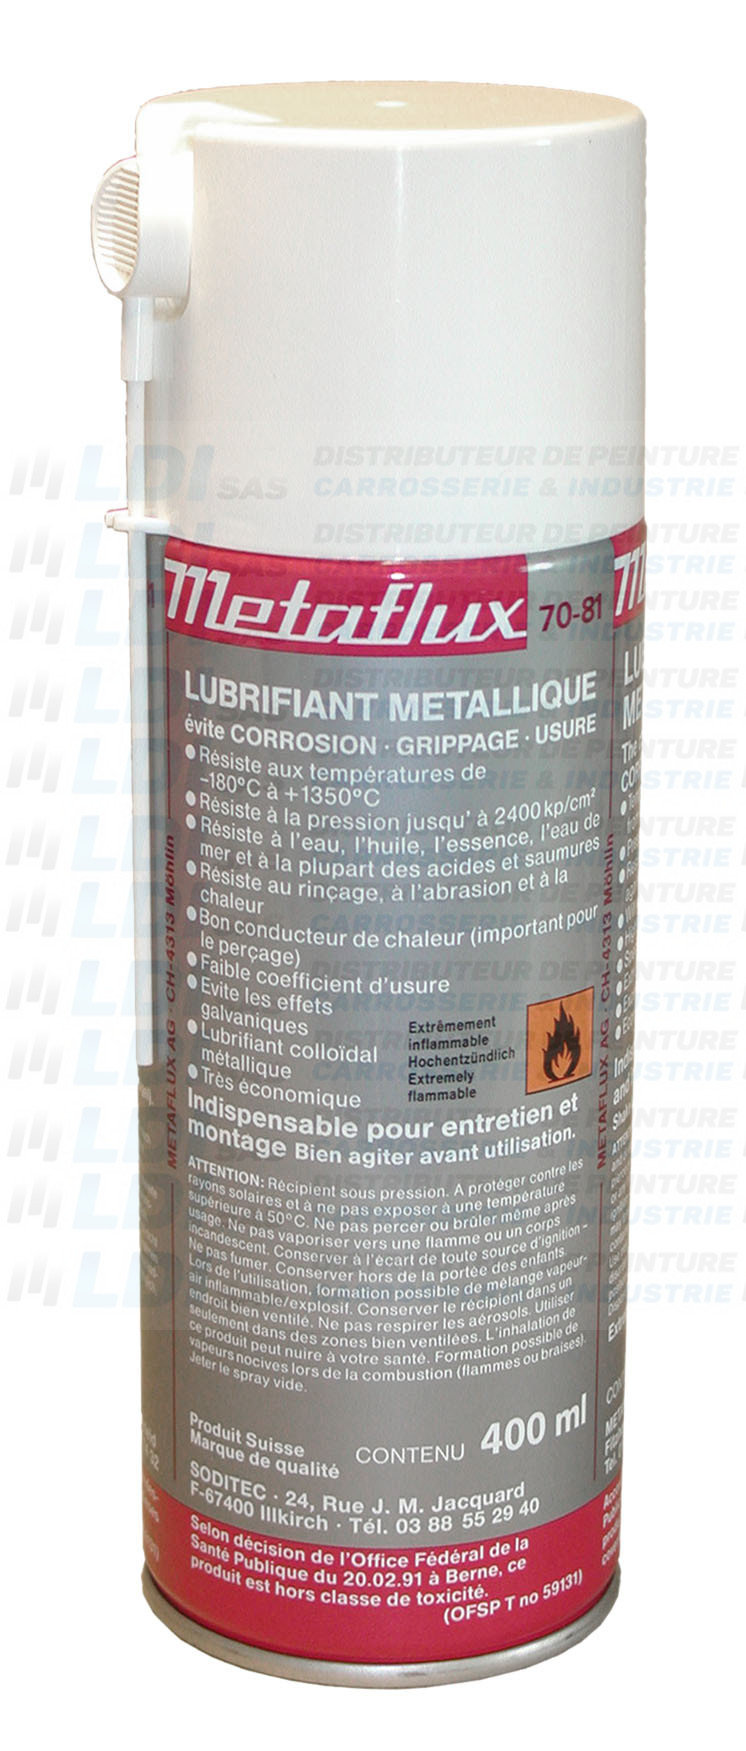 lubrifiant metallique aerosol 400ml